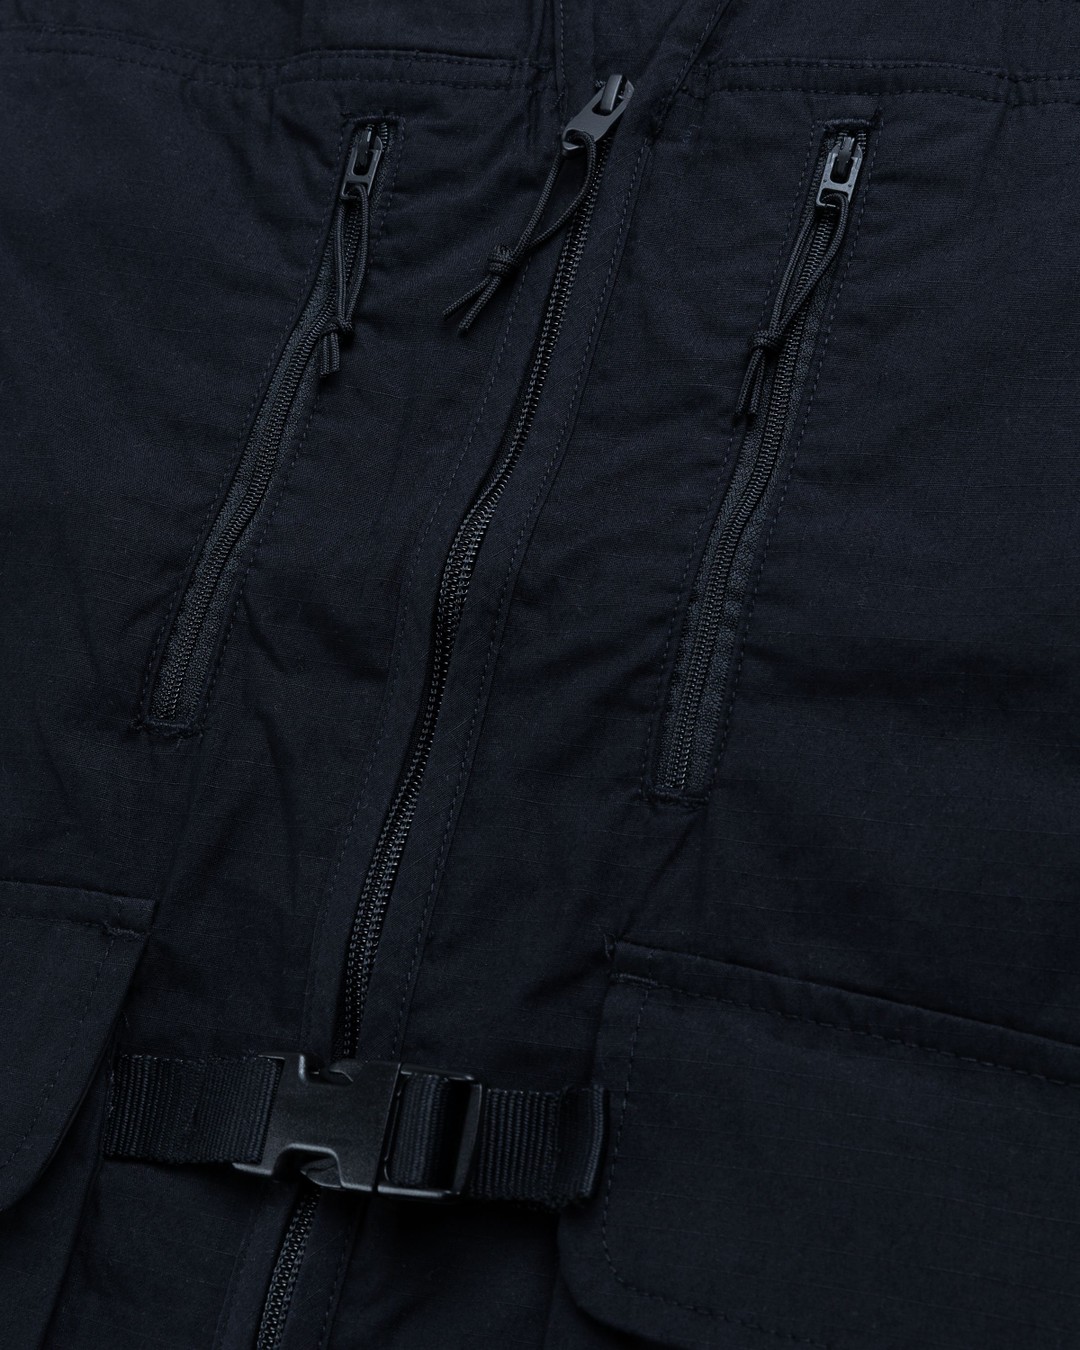 The North Face – M66 Utility Field Vest TNF Black - Outerwear - Black - Image 4